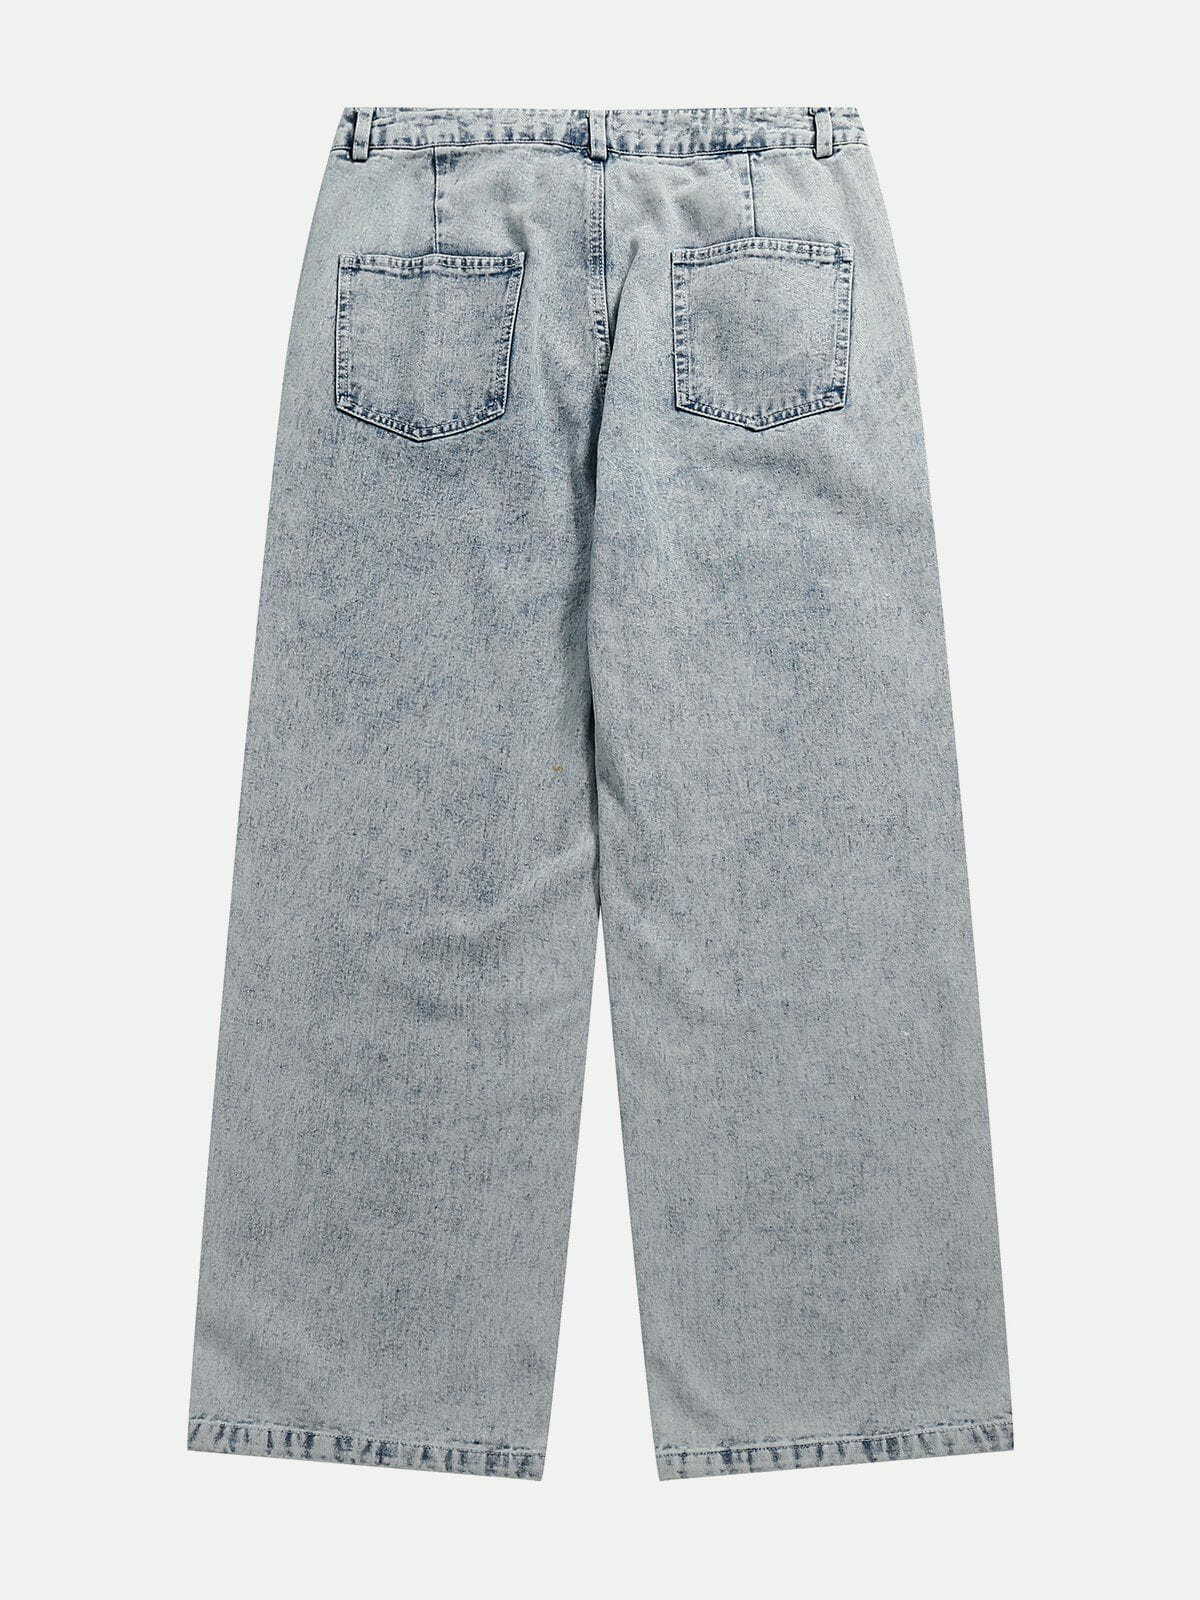 patchwork splash denim jeans edgy streetwear essential 2694